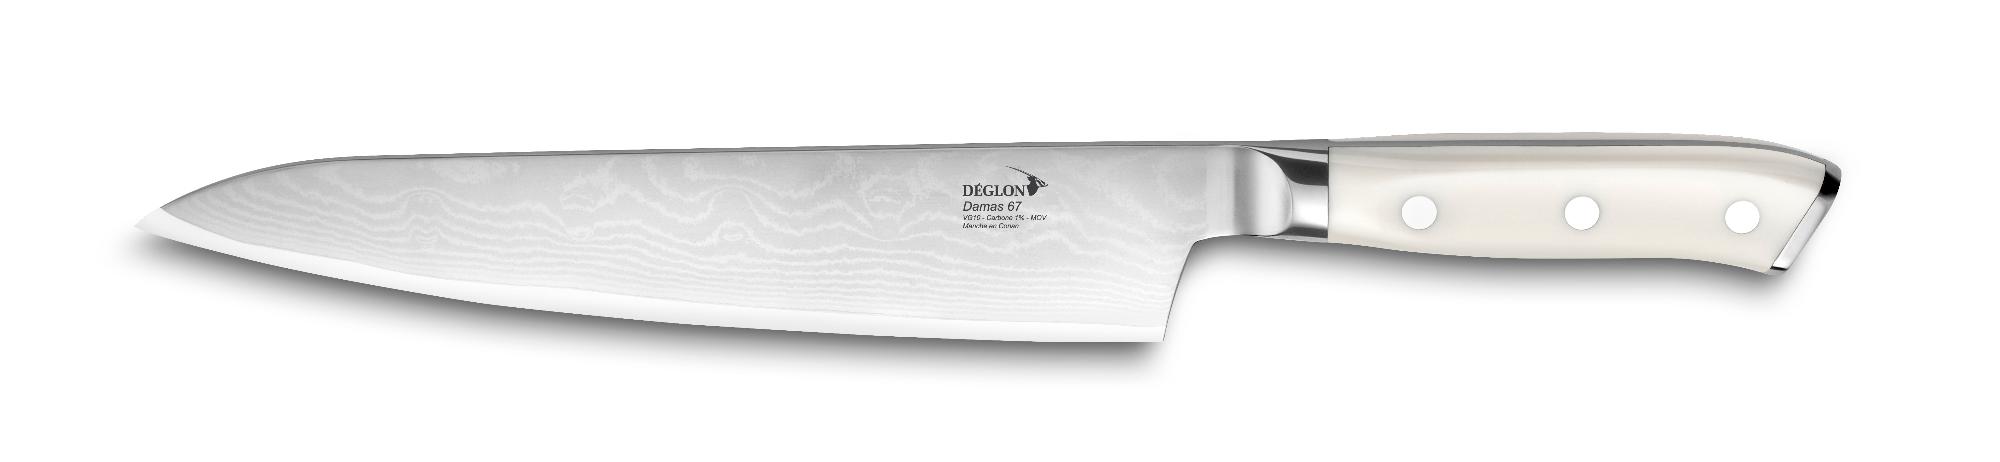 Damas 67 chefs knife, 200mm